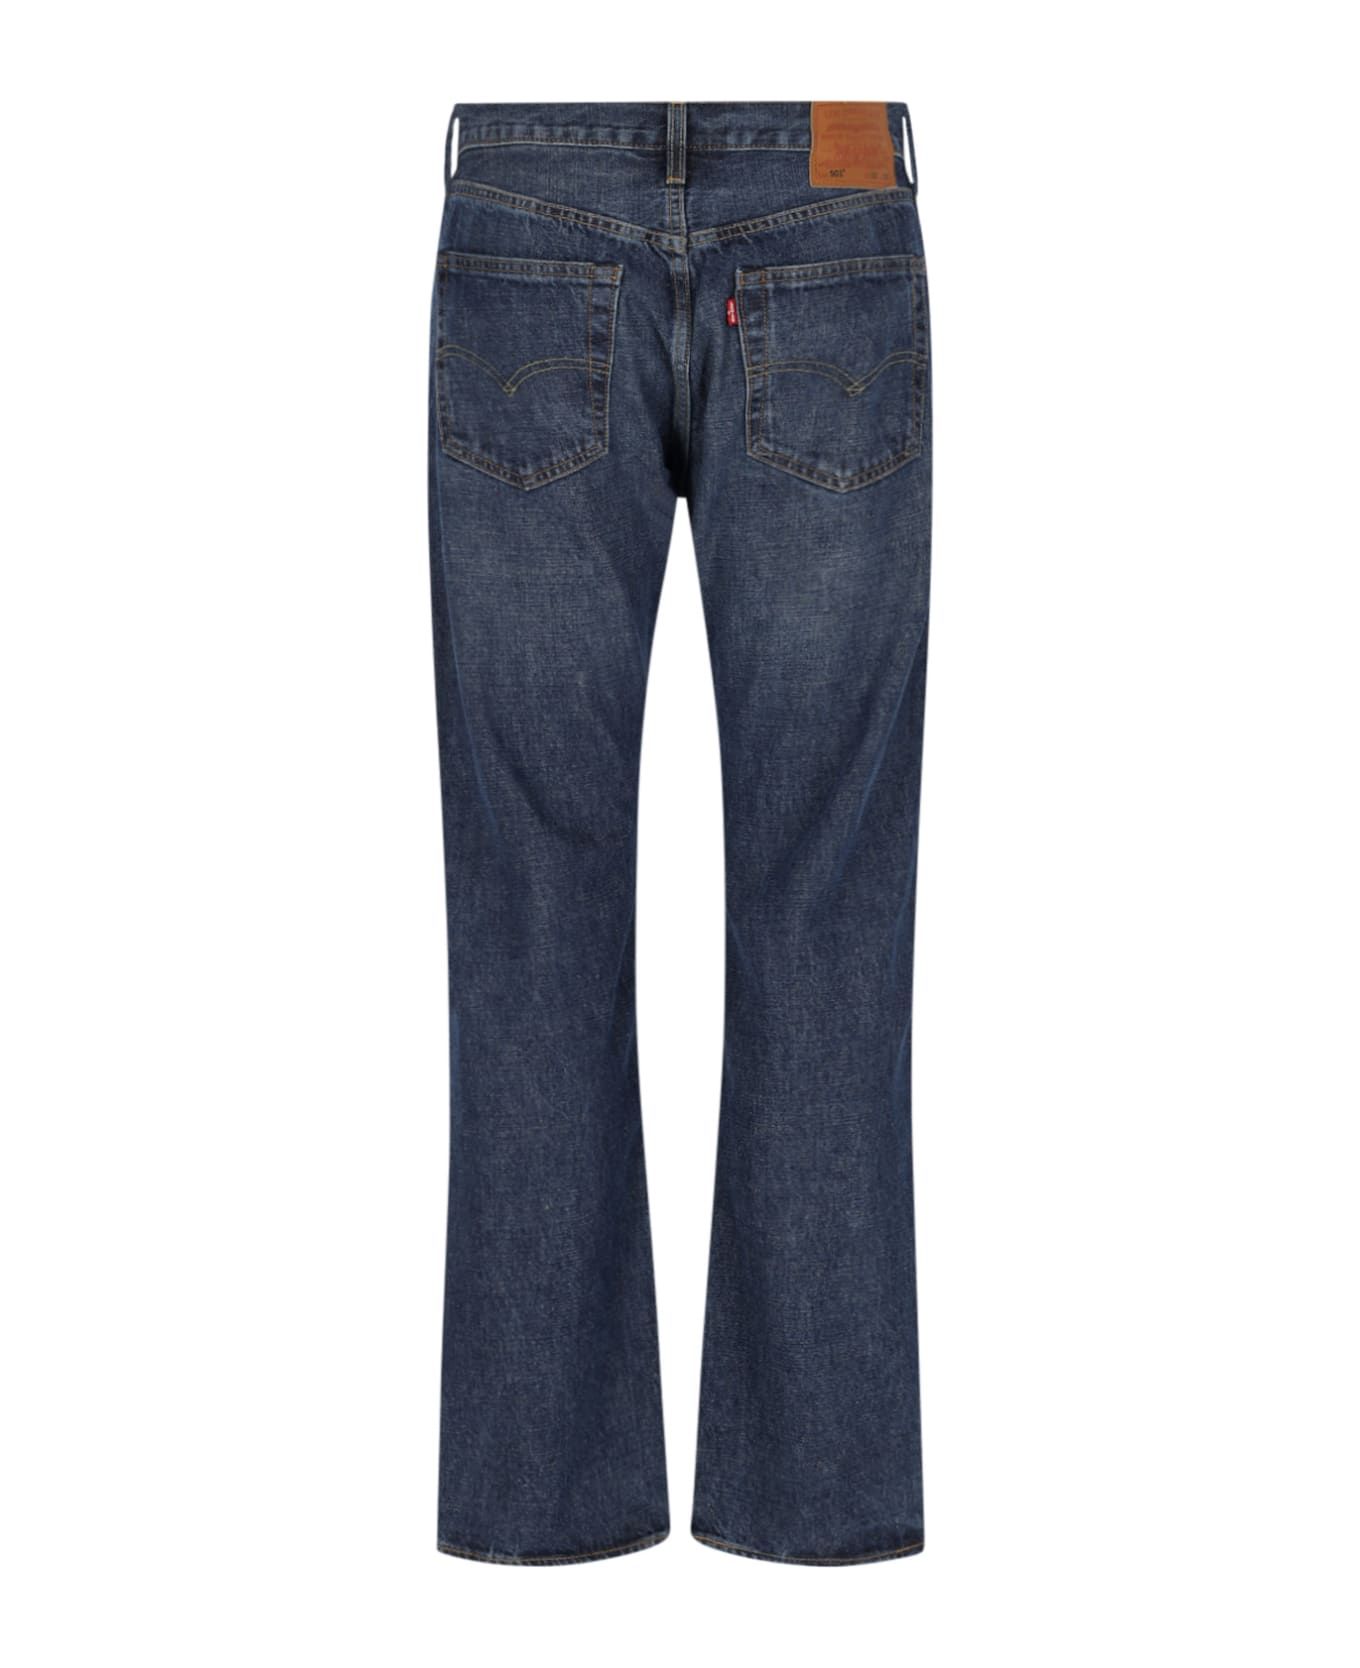 Levi's "501" Straight Jeans - Blue デニム